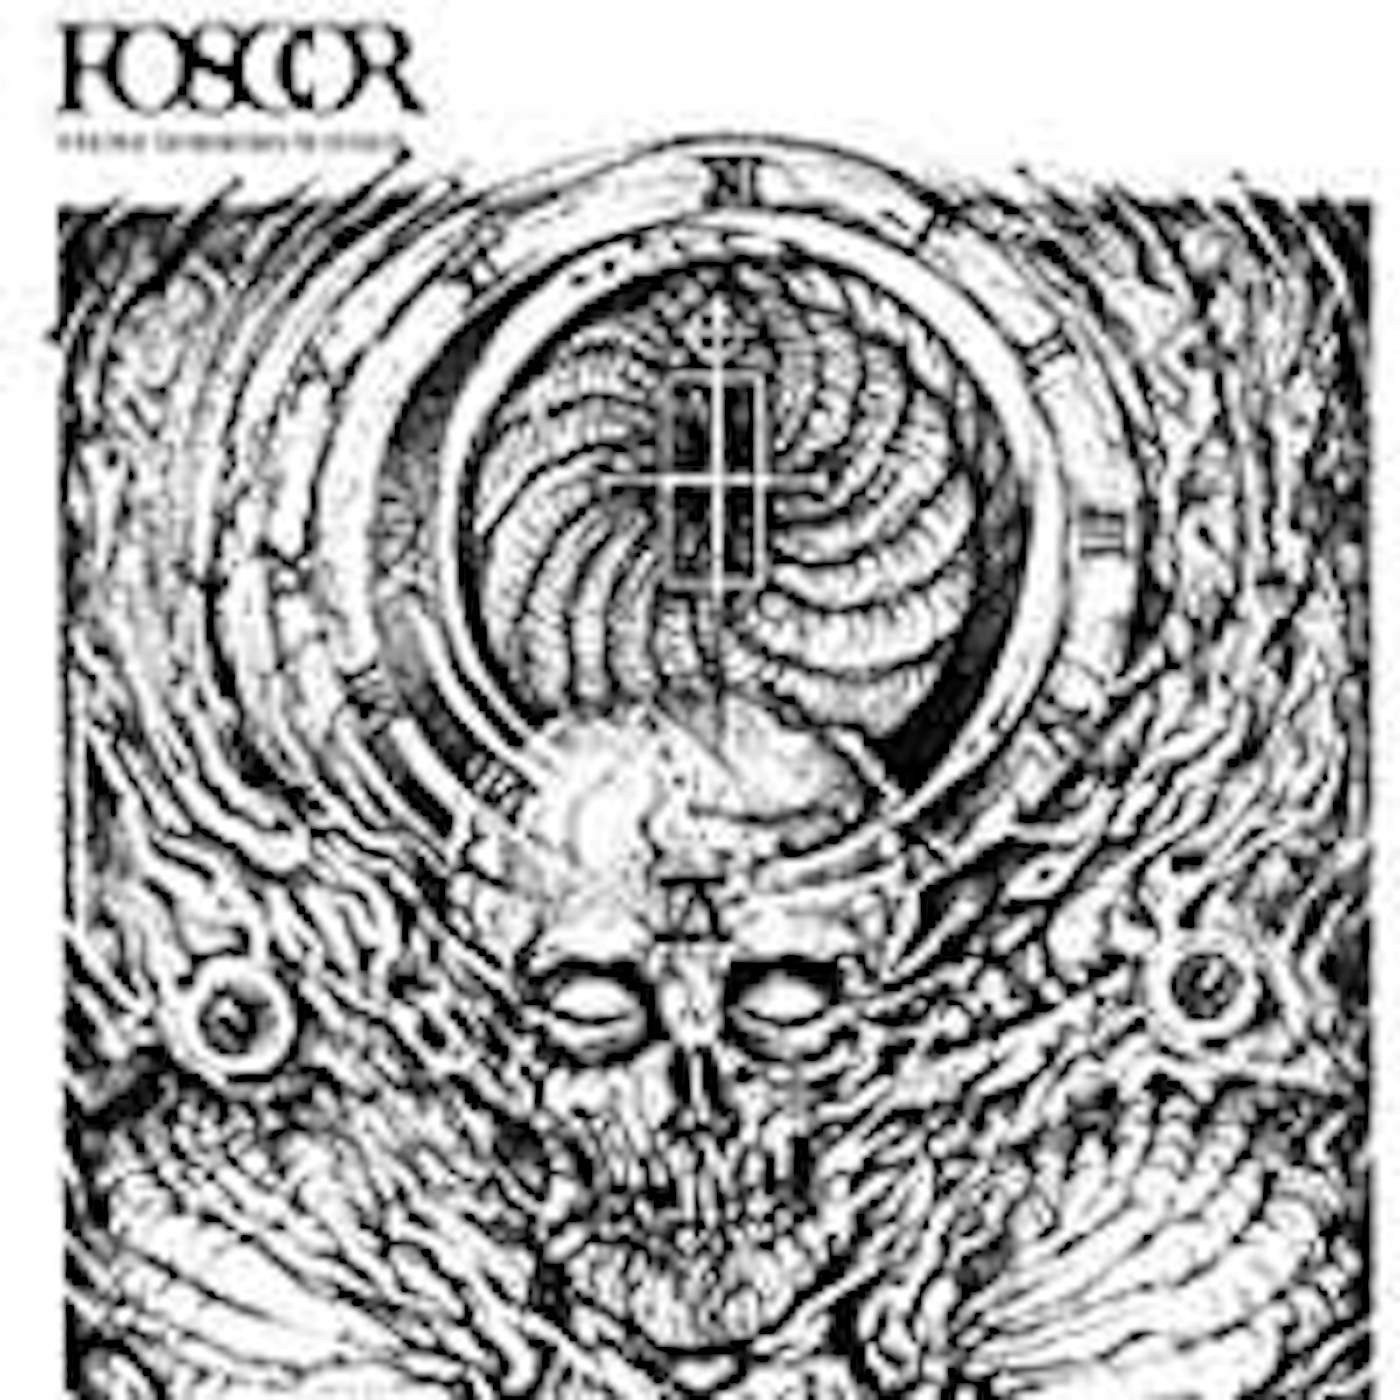 Foscor LP - Those Horrors Wither (Vinyl)